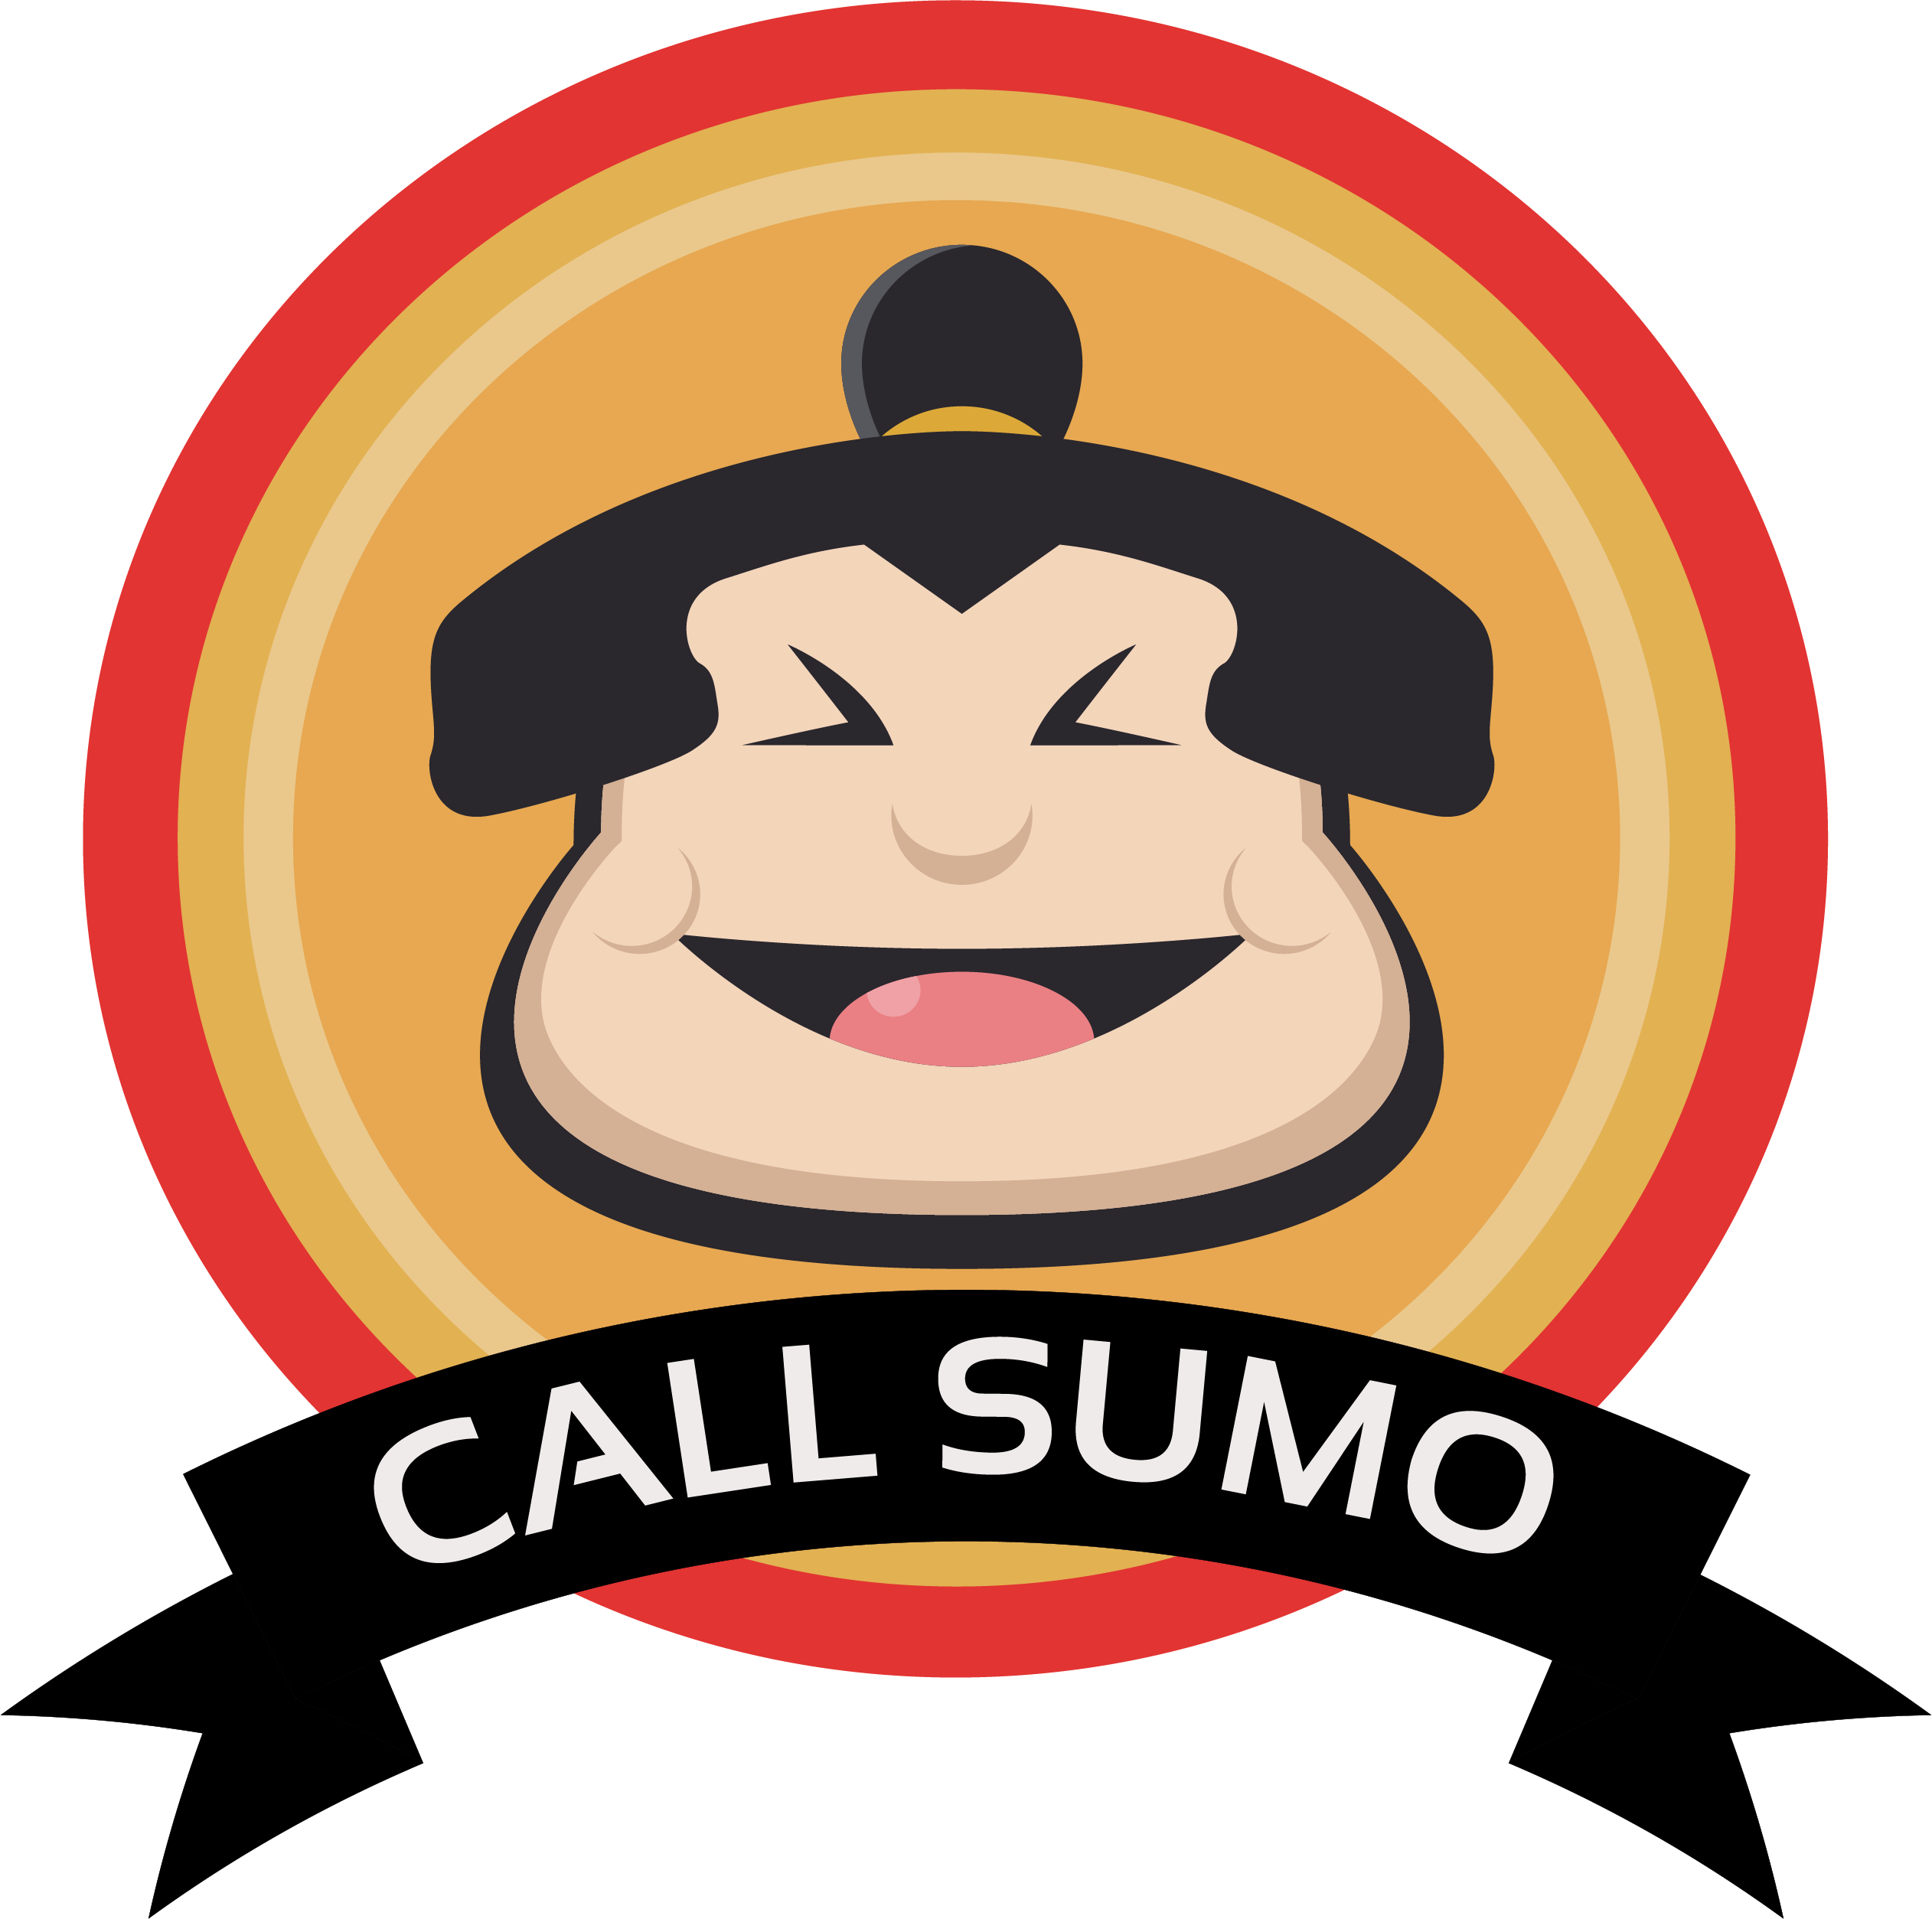 Call Sumo - Call Sumo (2524x2507)